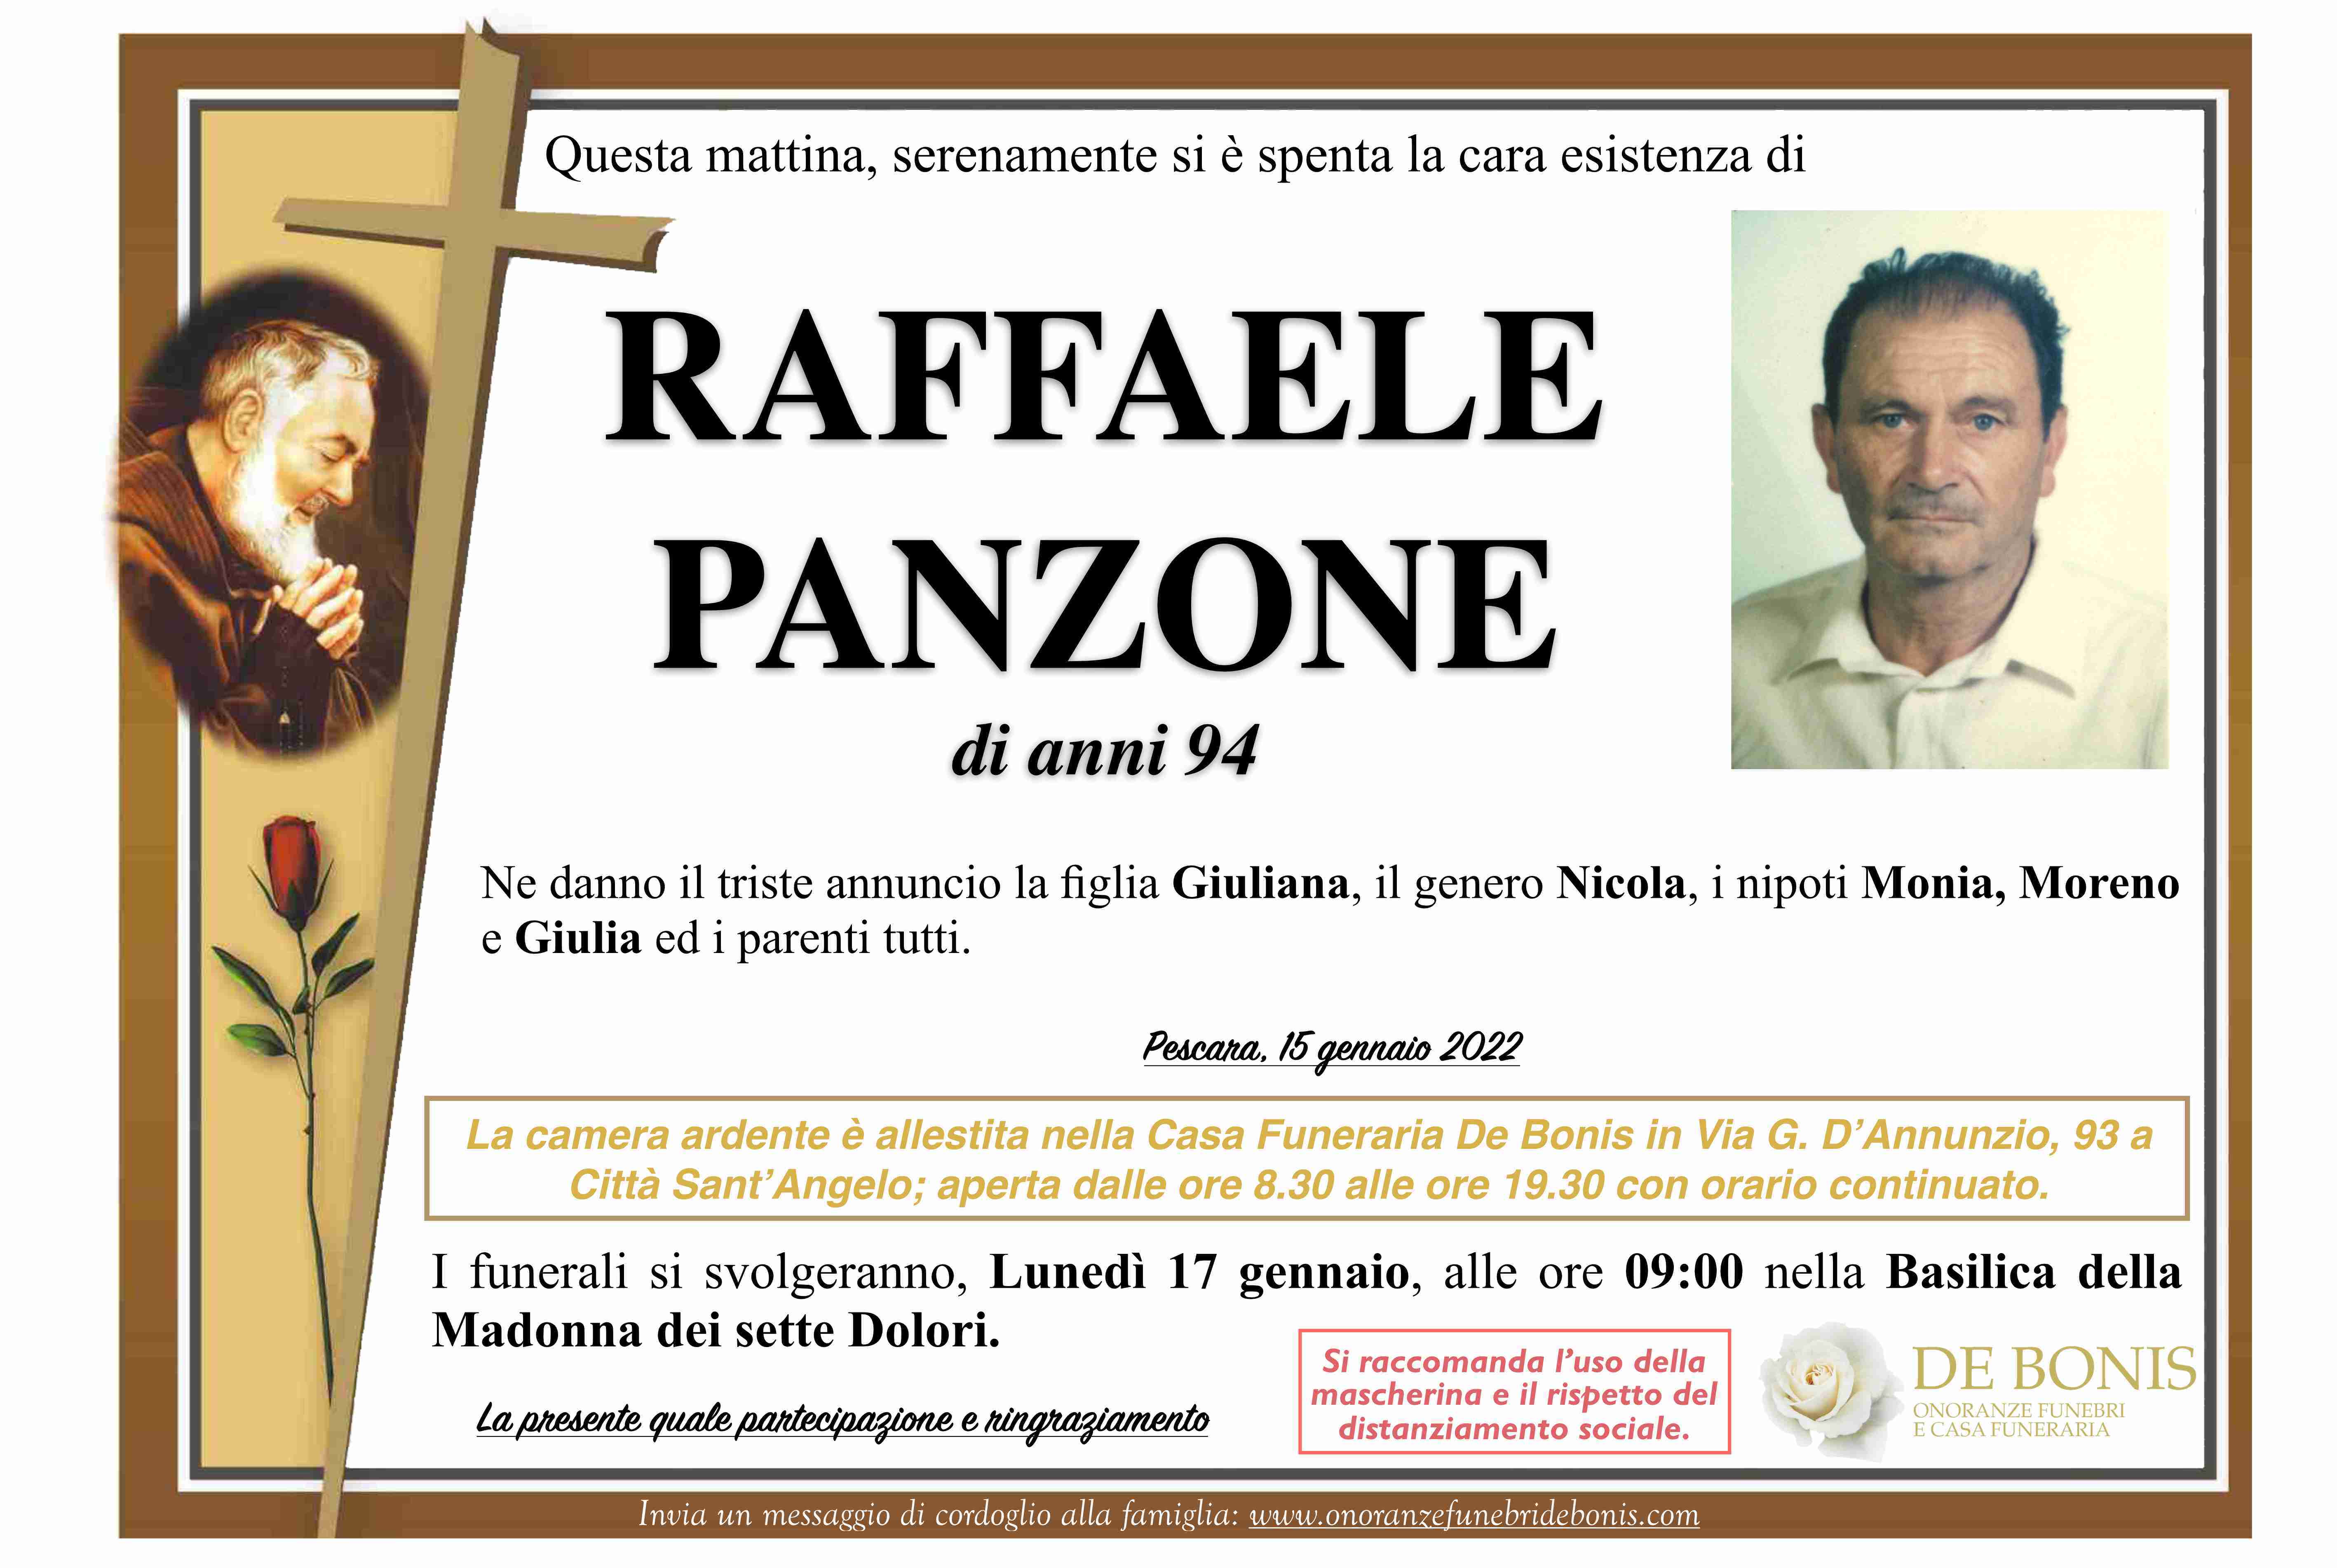 Raffaele Panzone